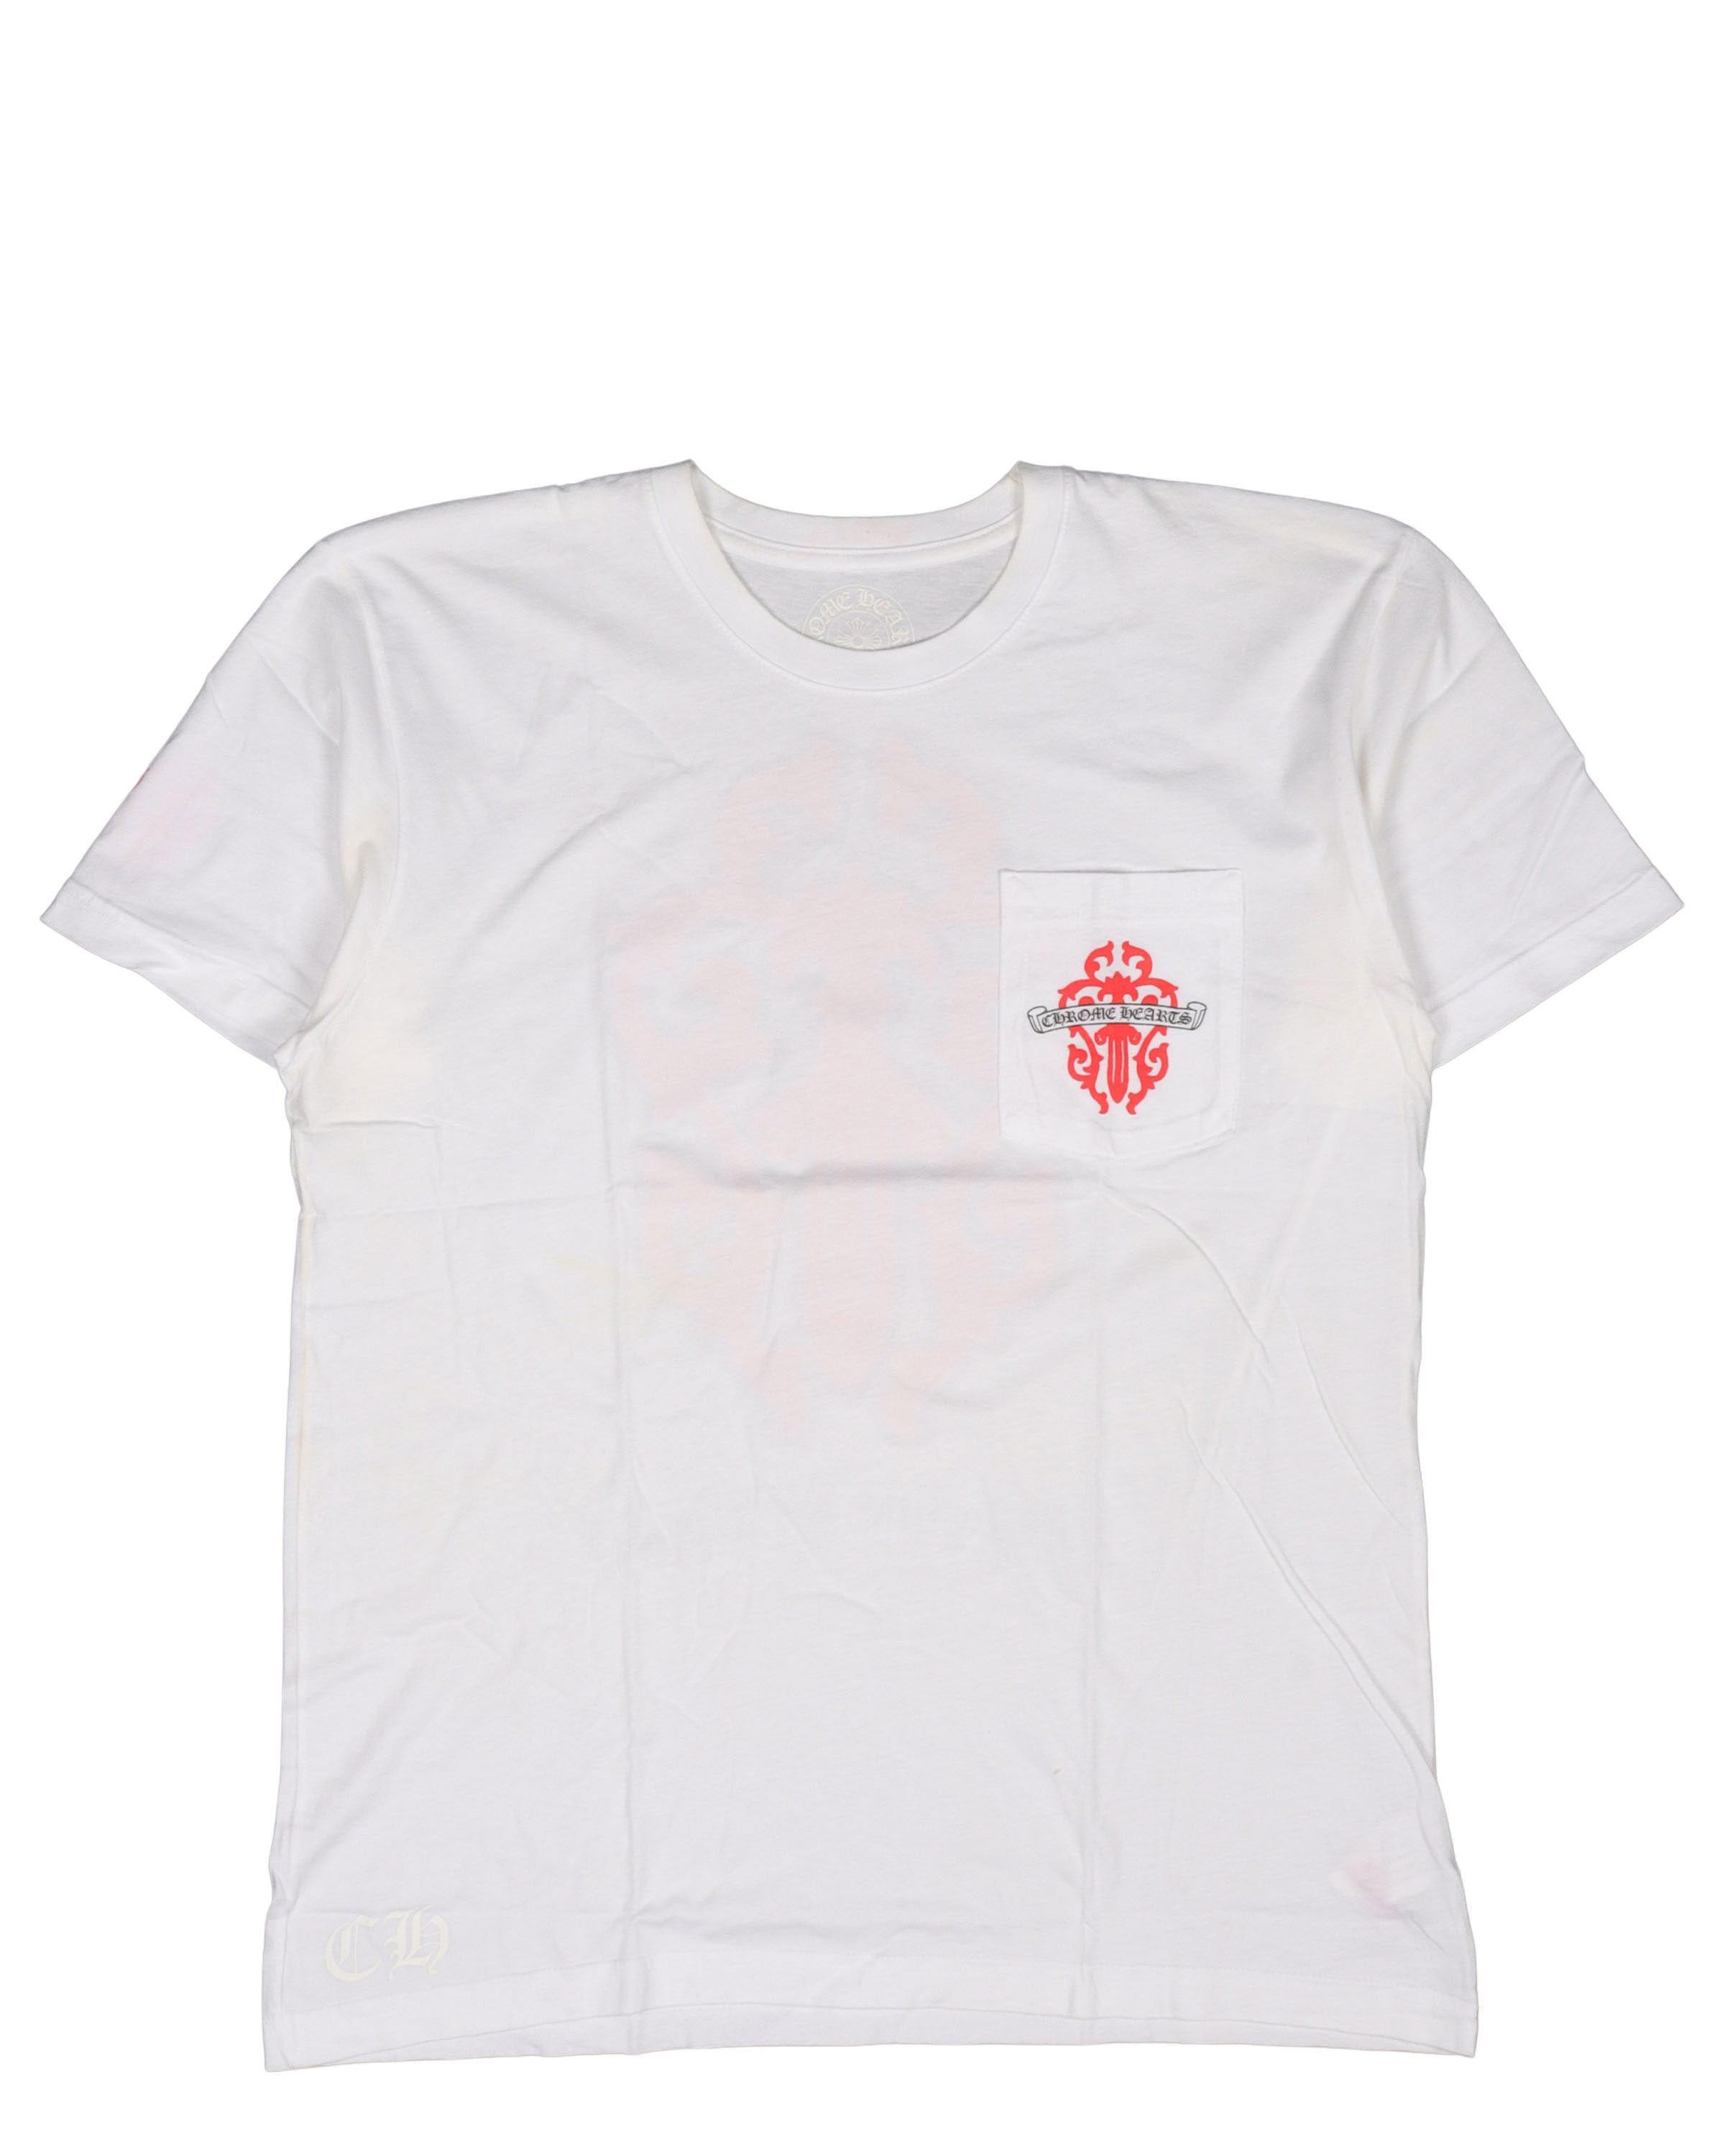 Chrome Hearts Dagger Logo T-Shirt